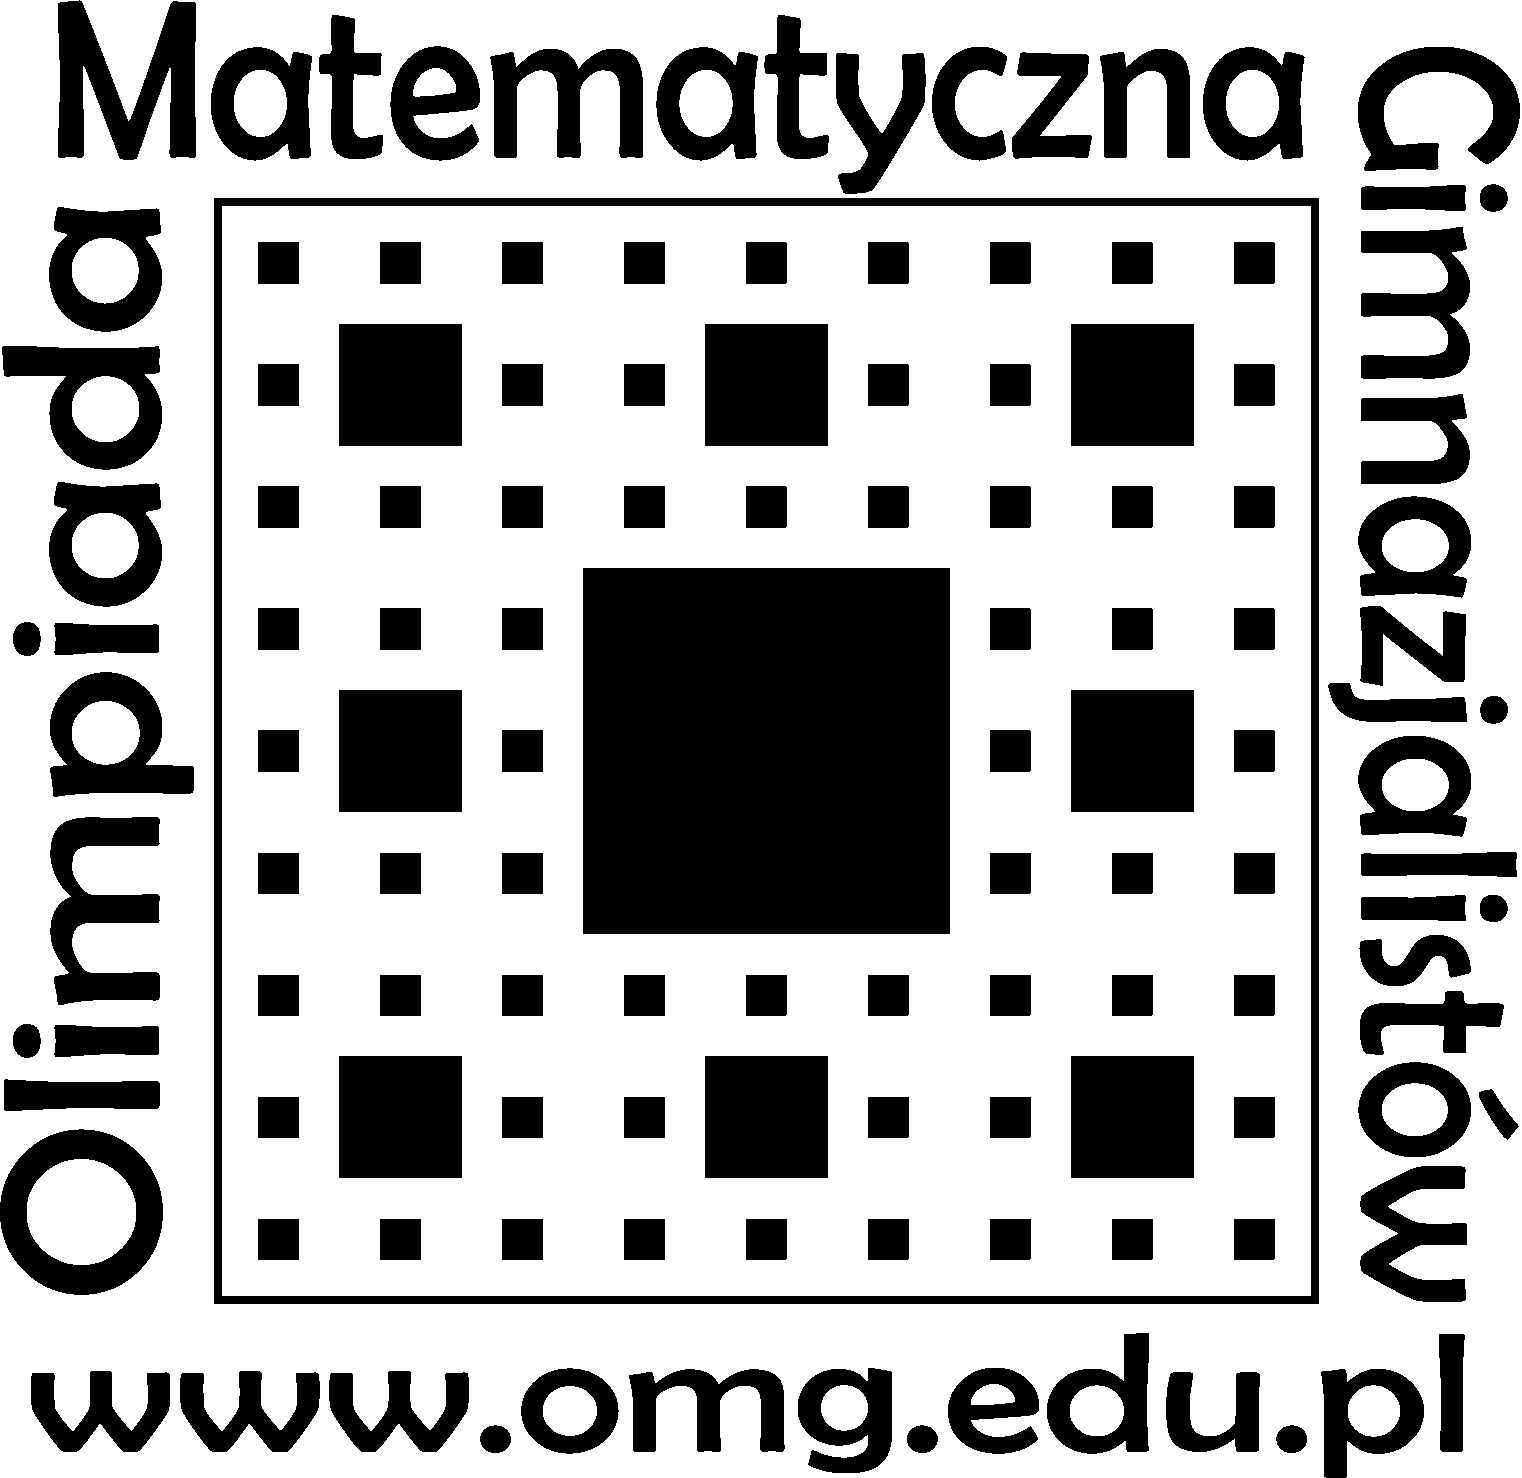 logo_omg